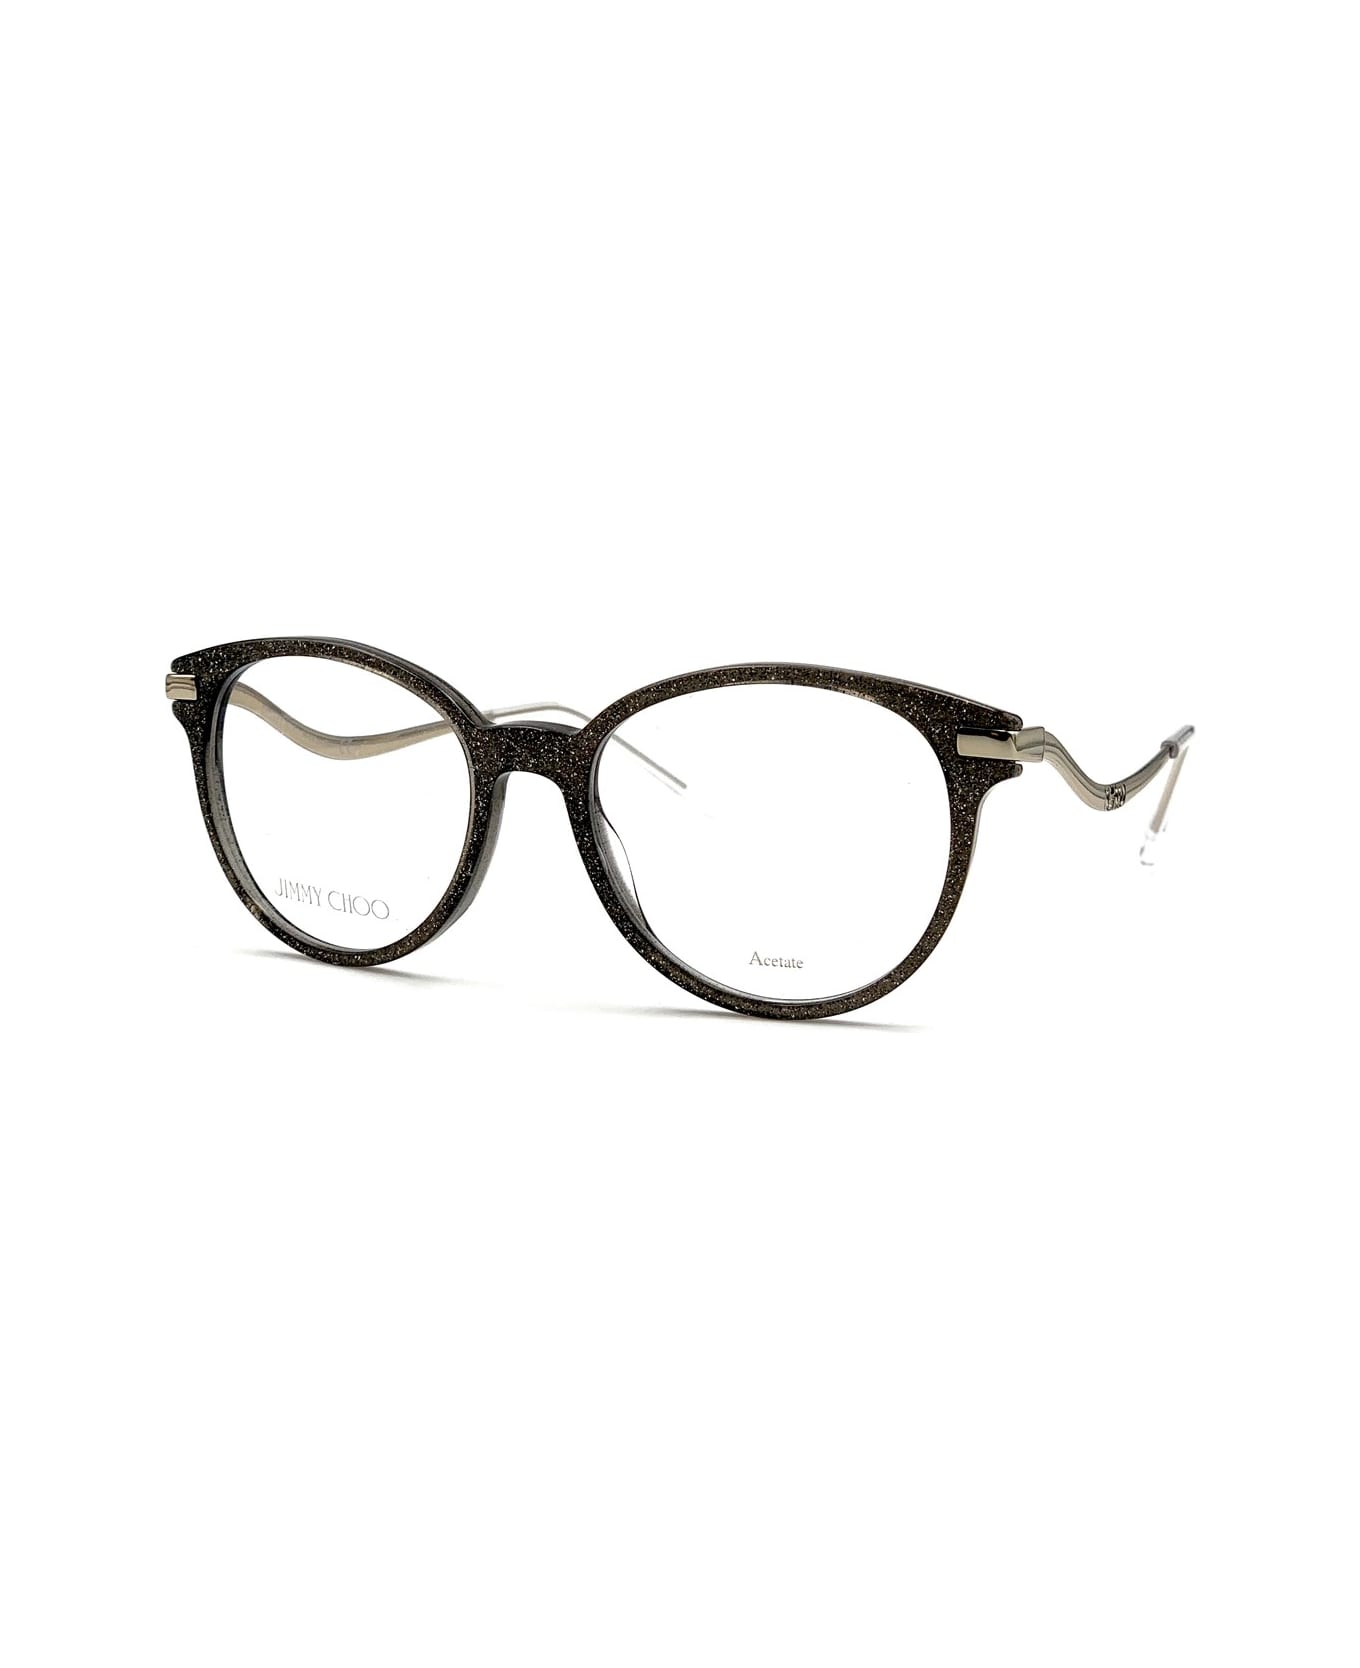 Jimmy Choo Eyewear Jc280 Glasses - Grigio アイウェア